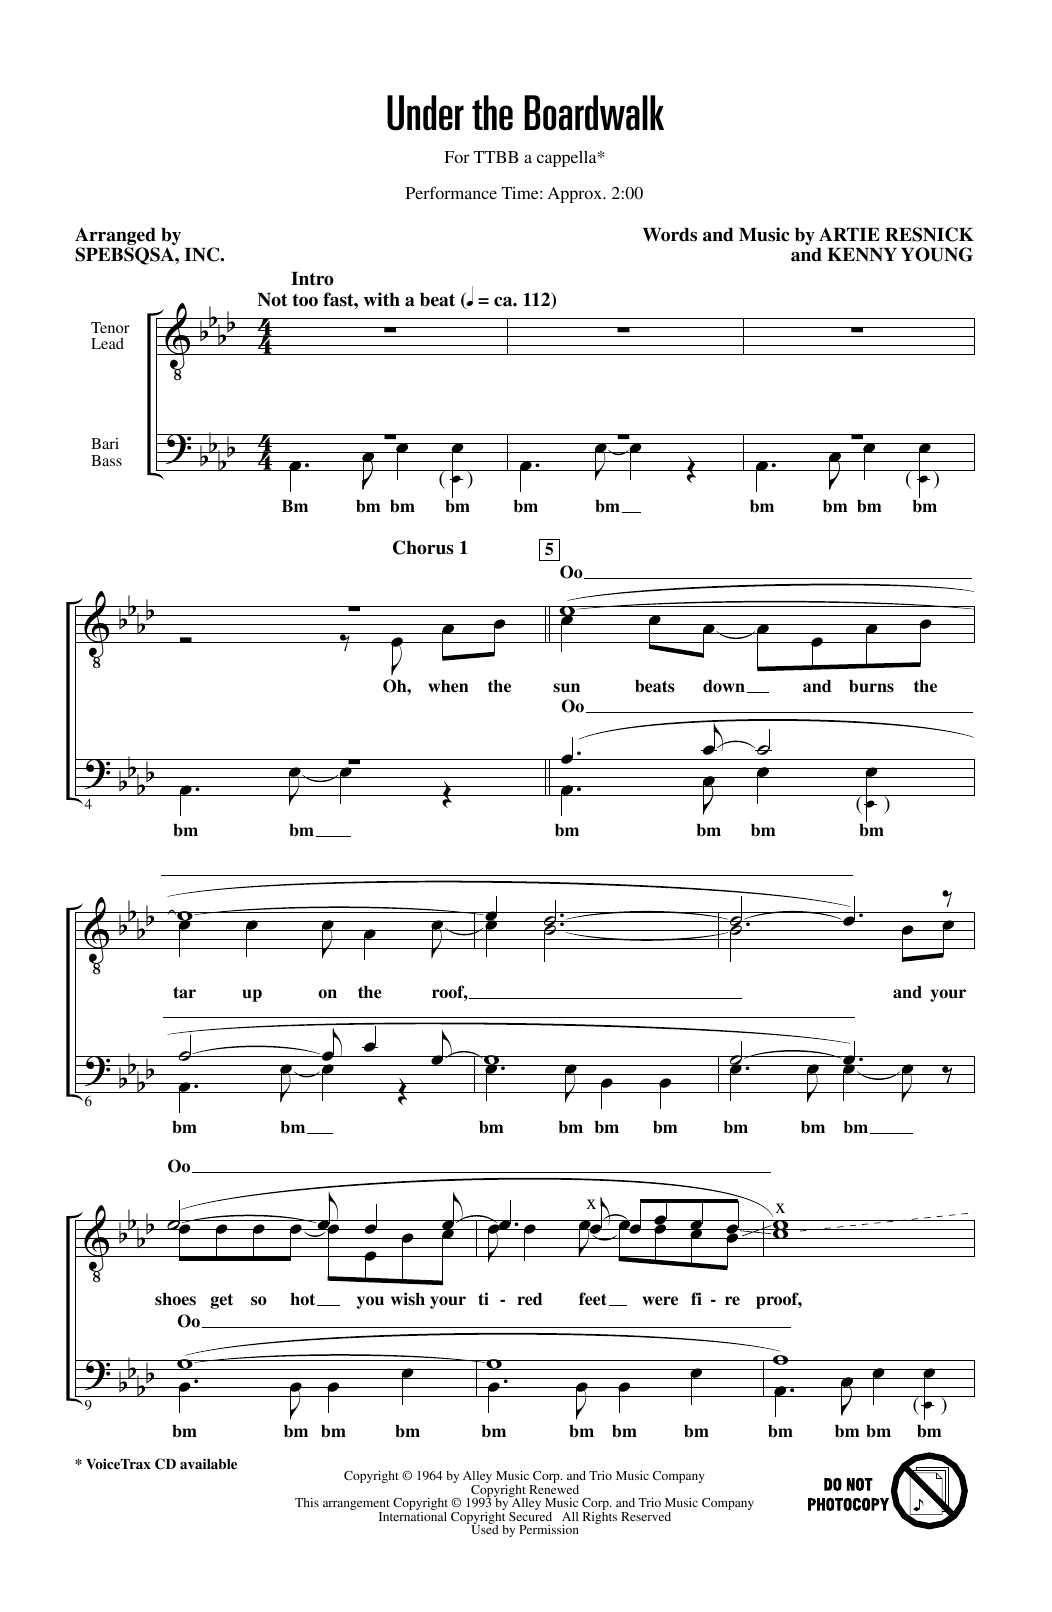 The Drifters Under The Boardwalk (arr. SPEBSQSA, Inc.) sheet music notes and chords arranged for TTBB Choir